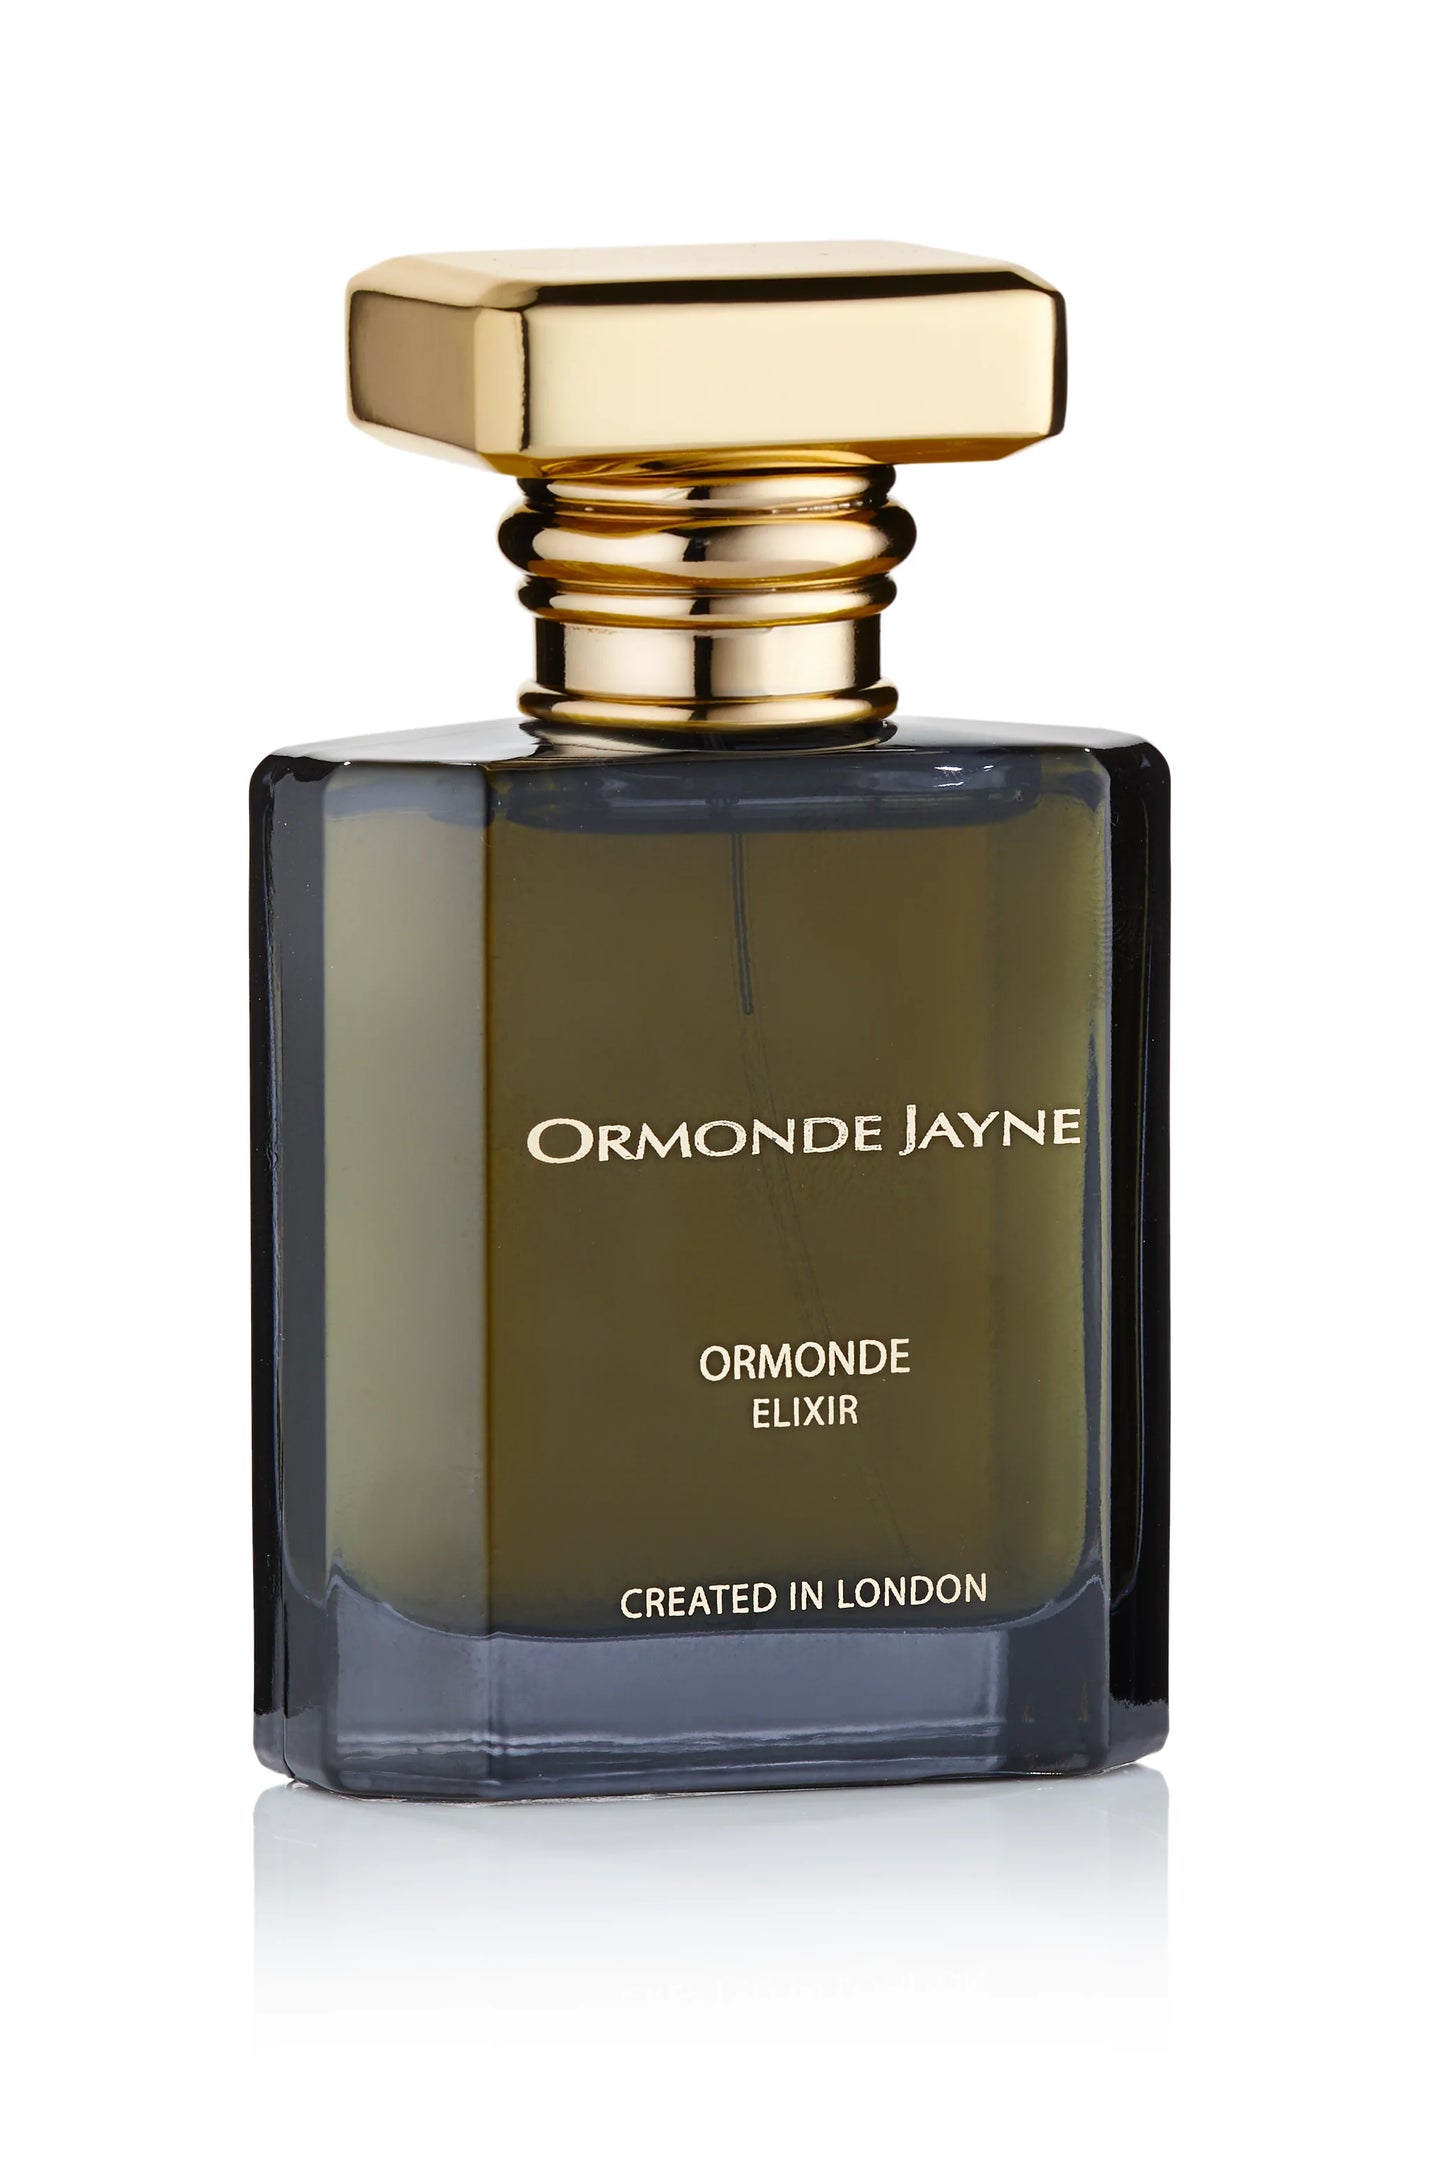 Ormonde Jayne Ormonde Elixir 2ml 0.06 fl. oz hivatalos illatminta